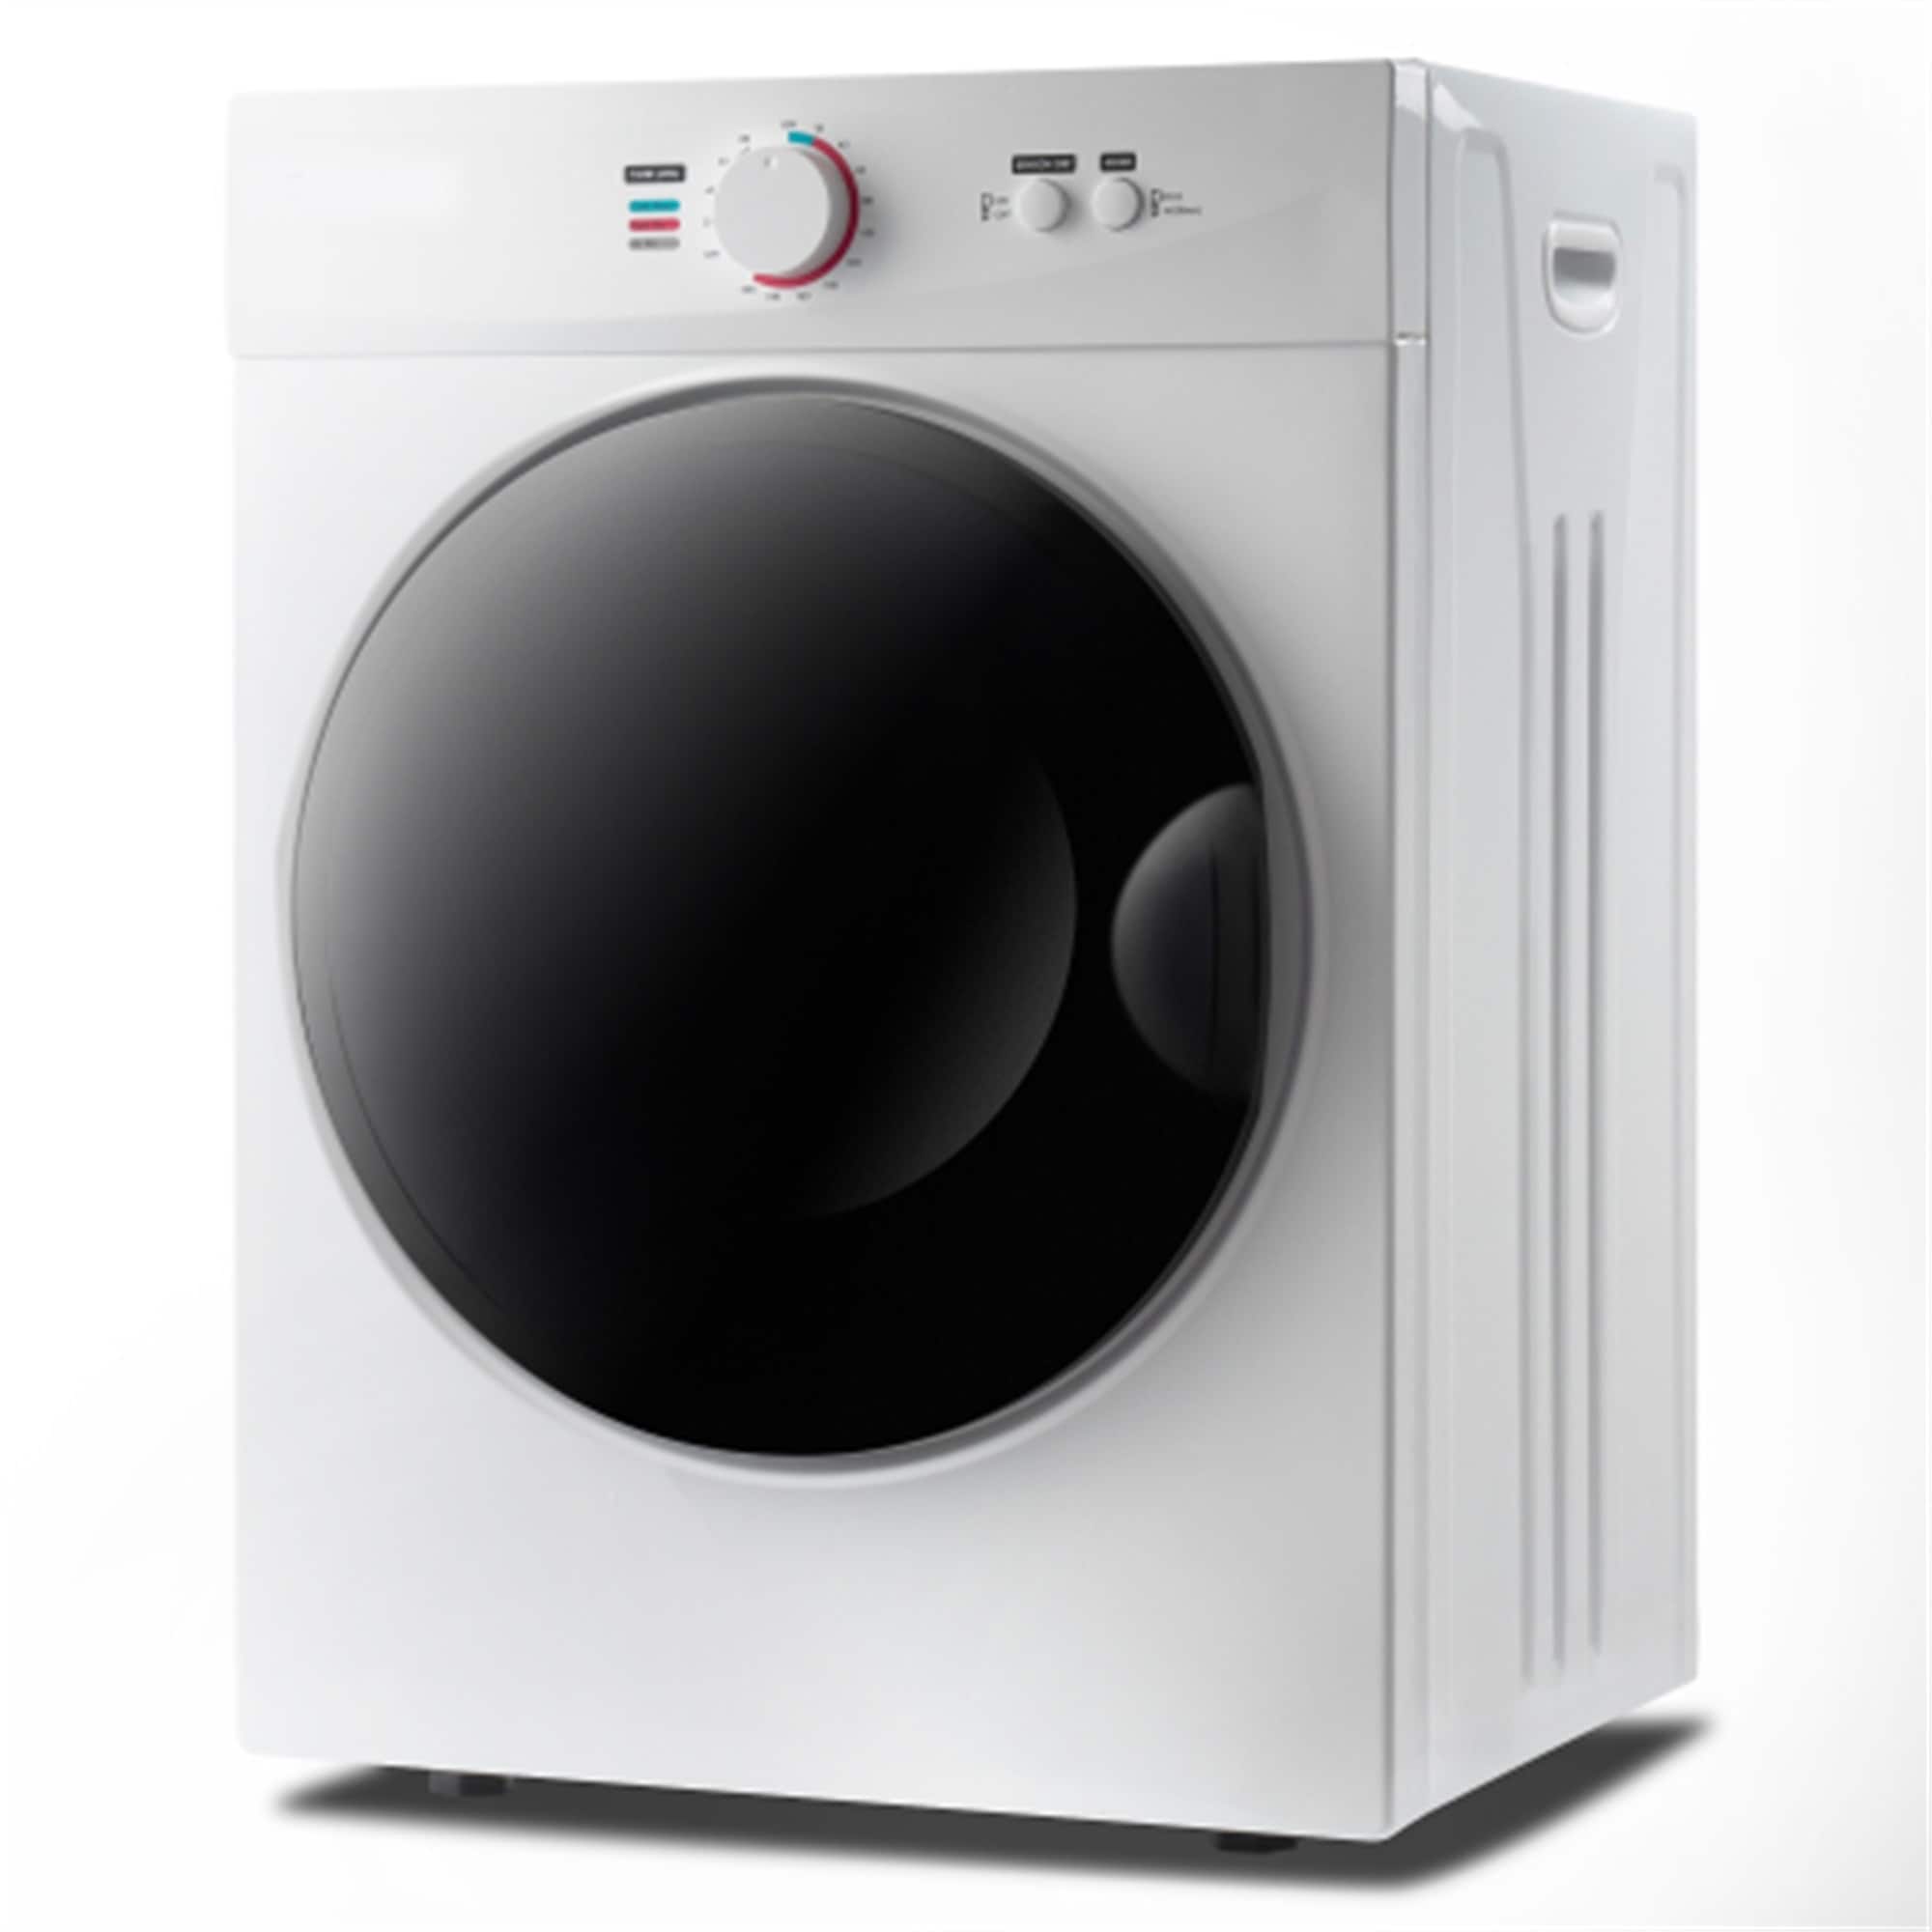  BLACK+DECKER BCED37 Compact Dryer for Standard Wall